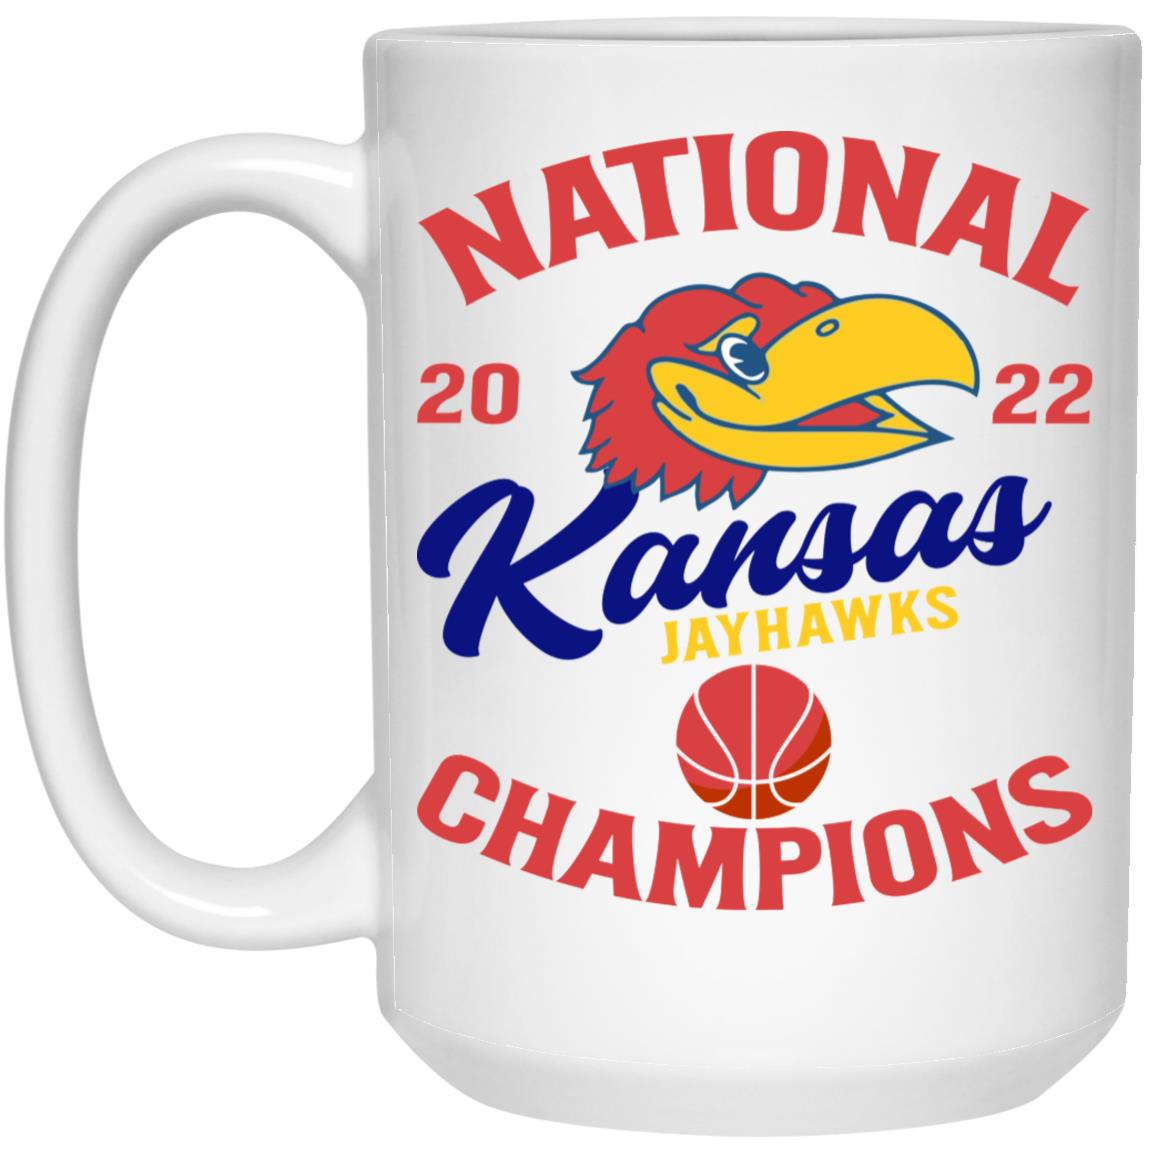 2022 Men's Basketball National  Champion White Mug(15 0z.)